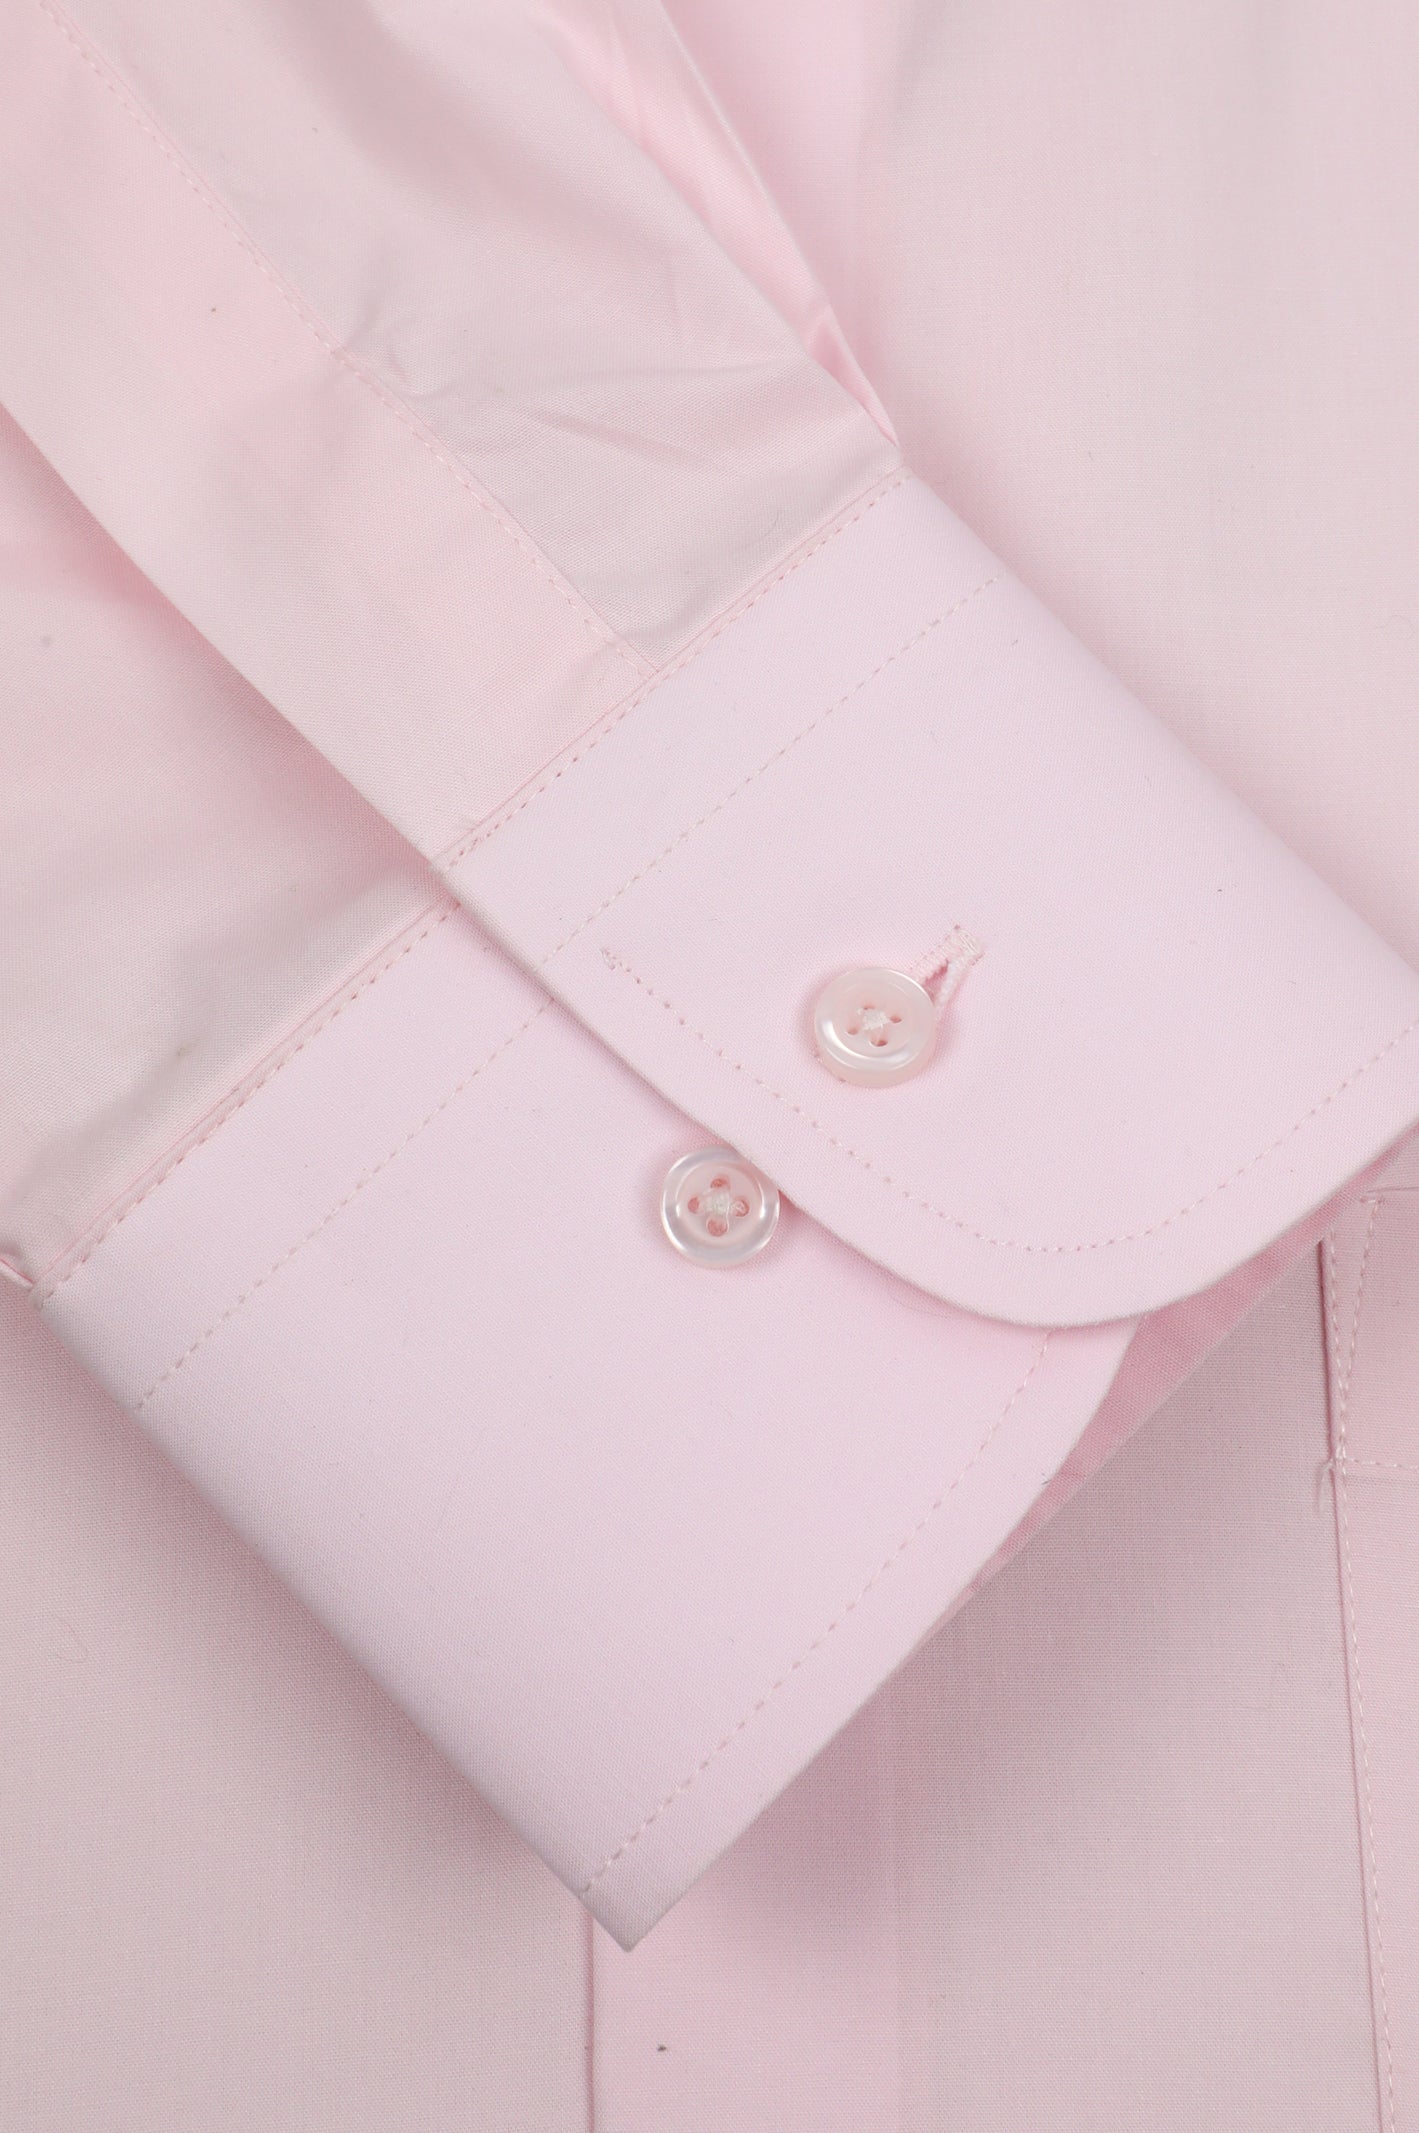 Formal Men Shirt in Pink SKU: AD25437-PINK - Diners